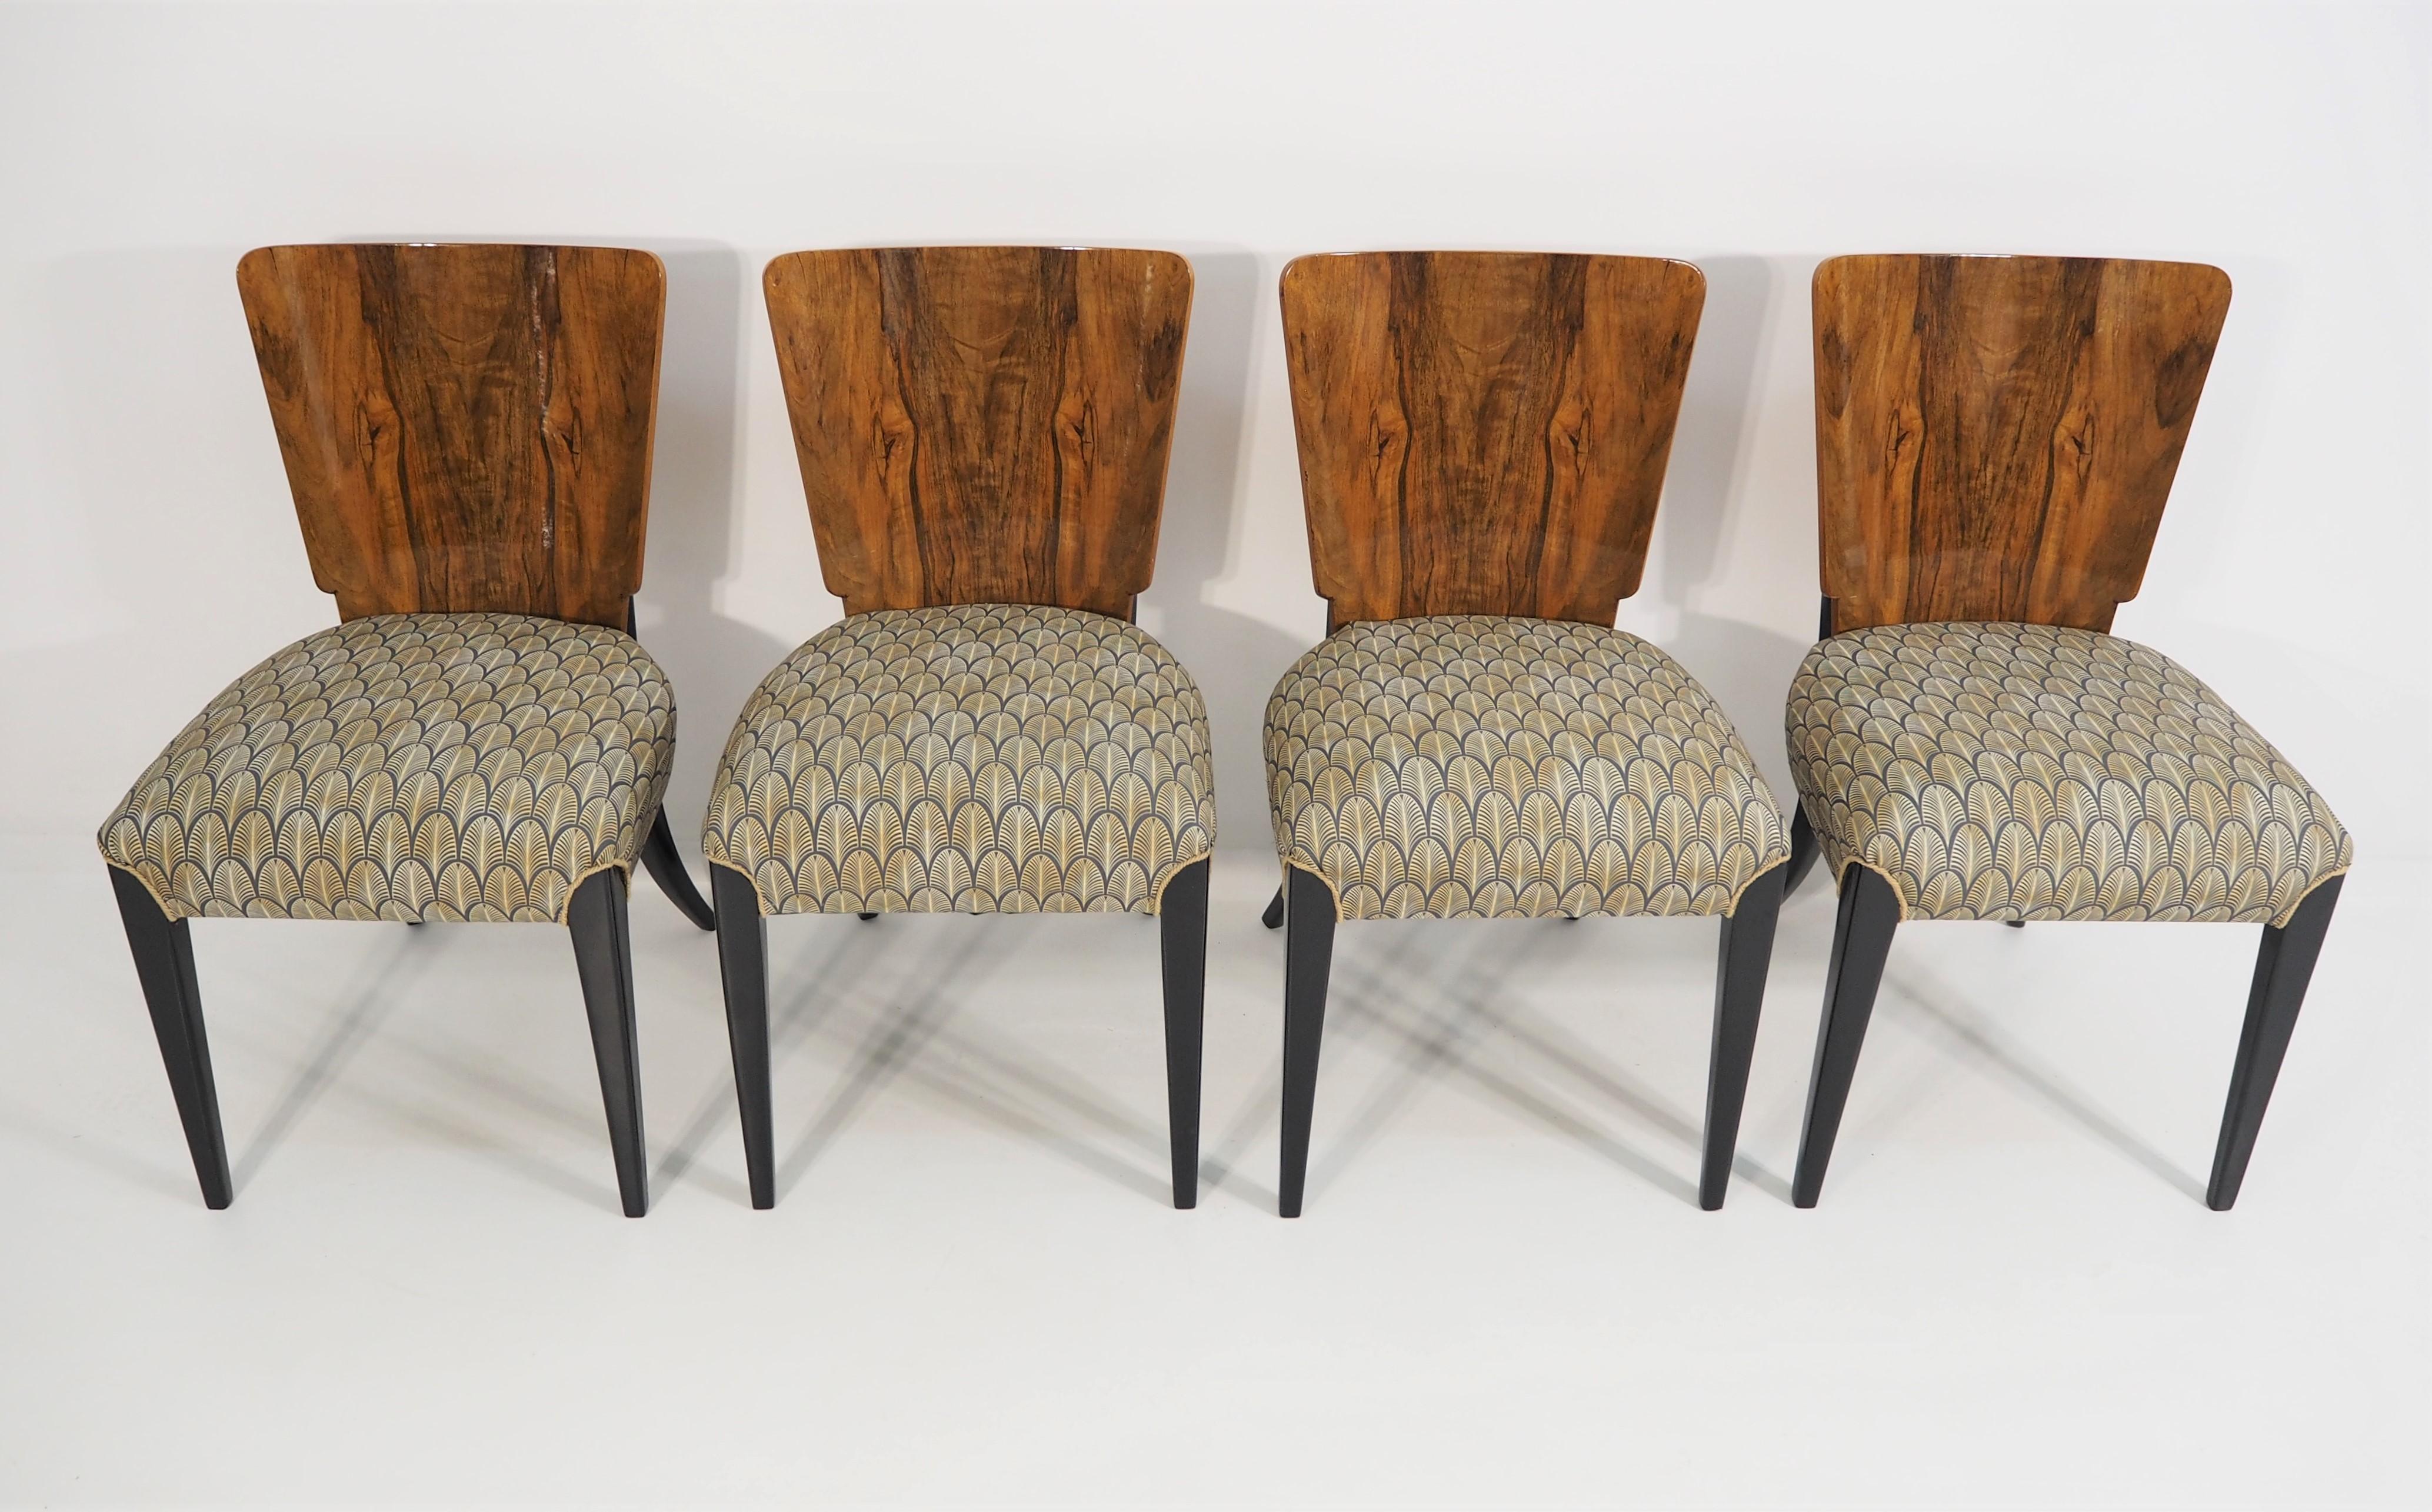 These 4 chairs were designed by Jindrich Halabala in former Czechoslovakia in the 1940s. Beautiful walnut veneer.